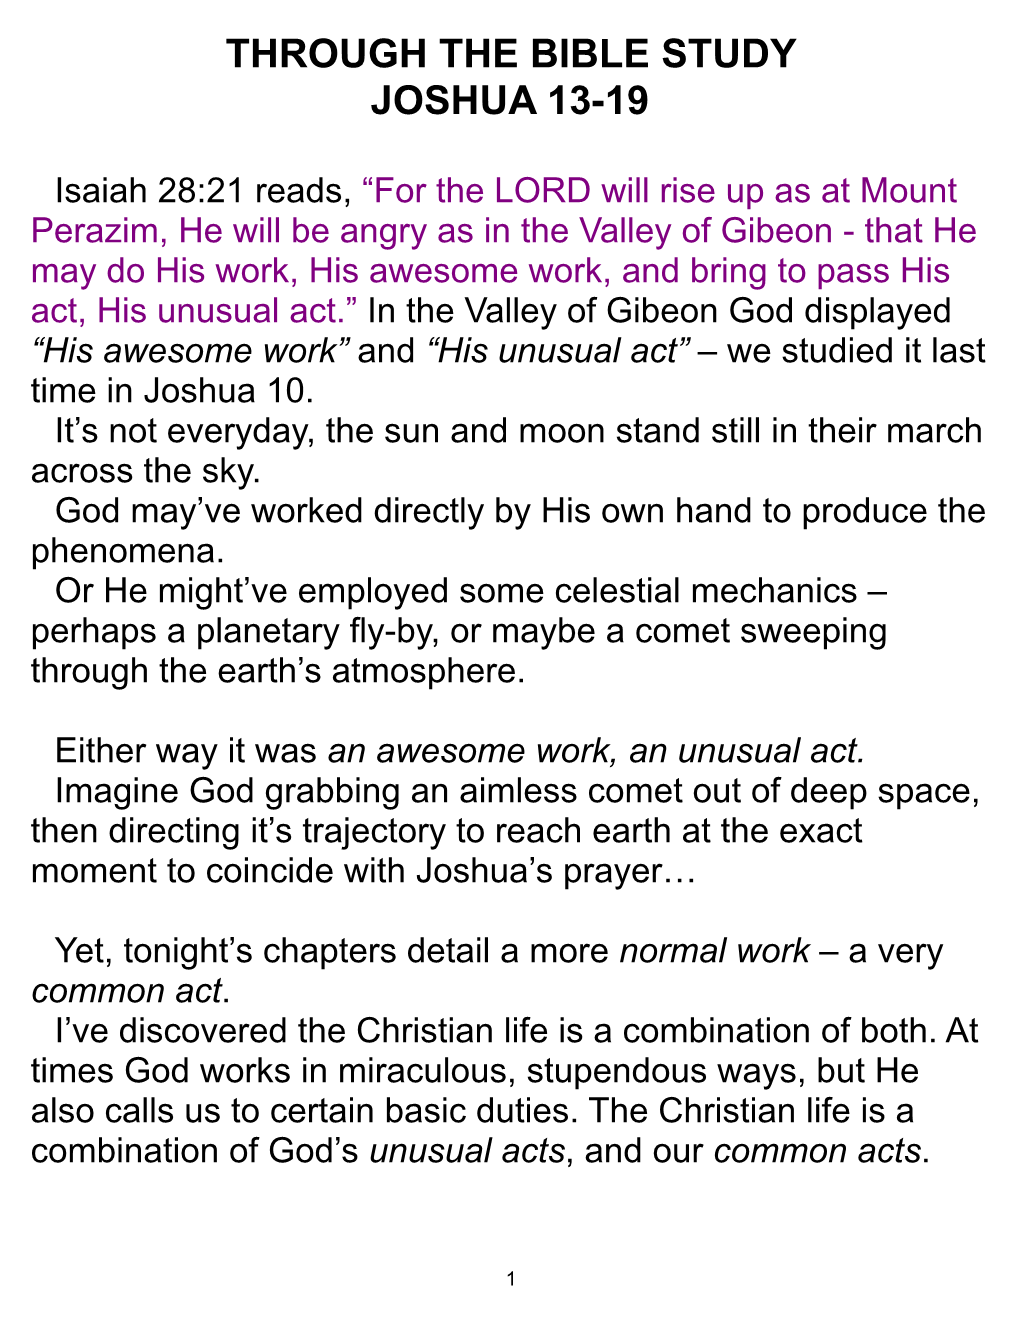 Through the Bible Study Joshua 13-19